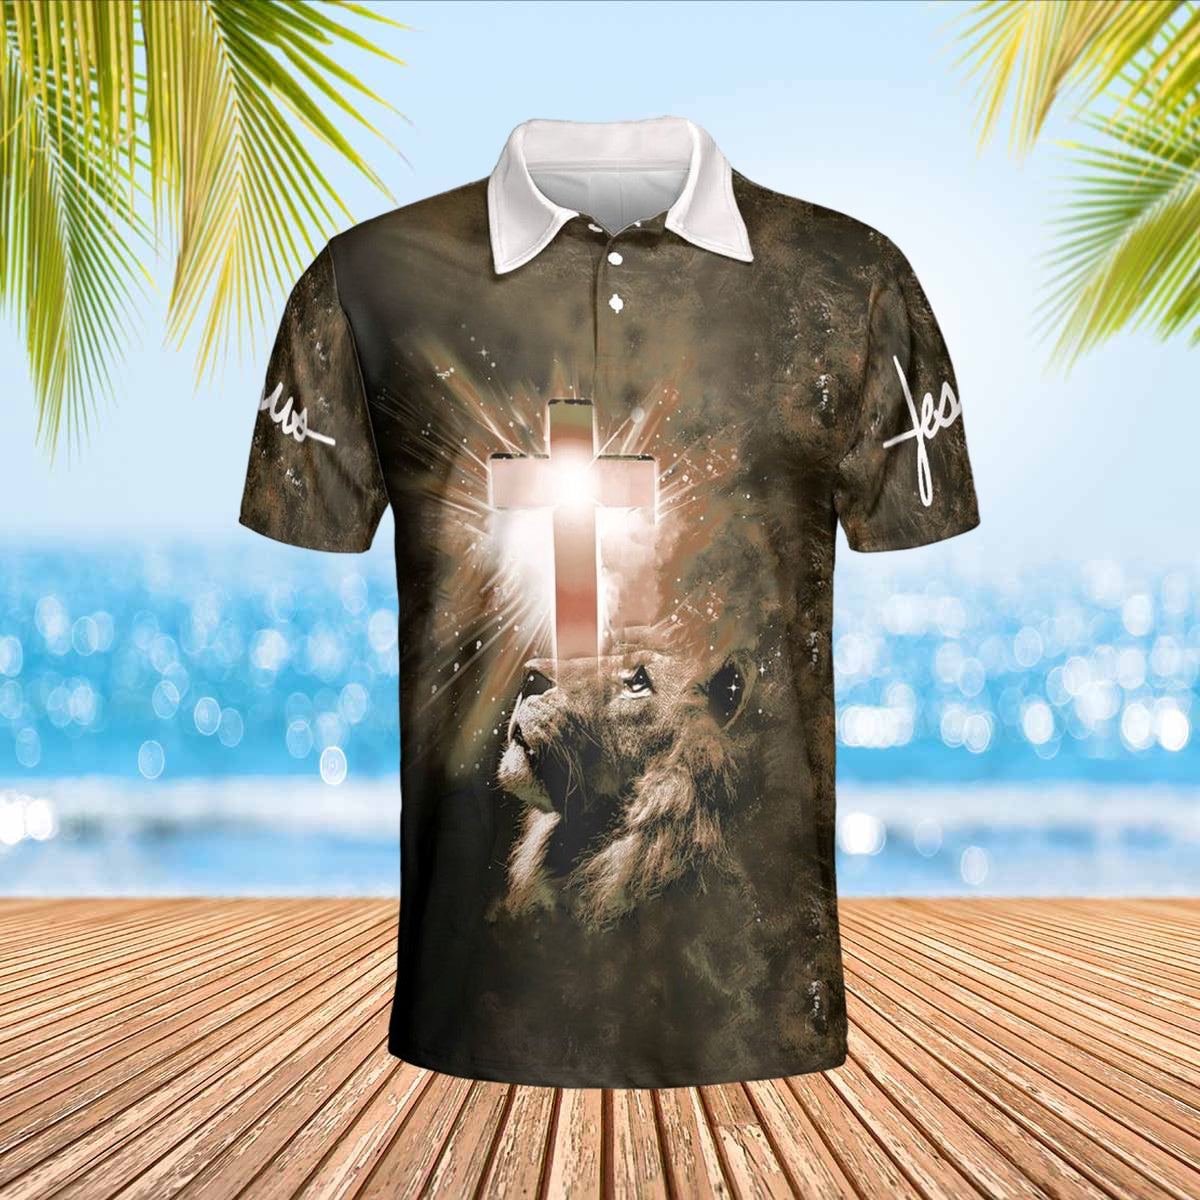 Lion Faith Over Fear Polo Shirts - Christian Shirt For Men And Women